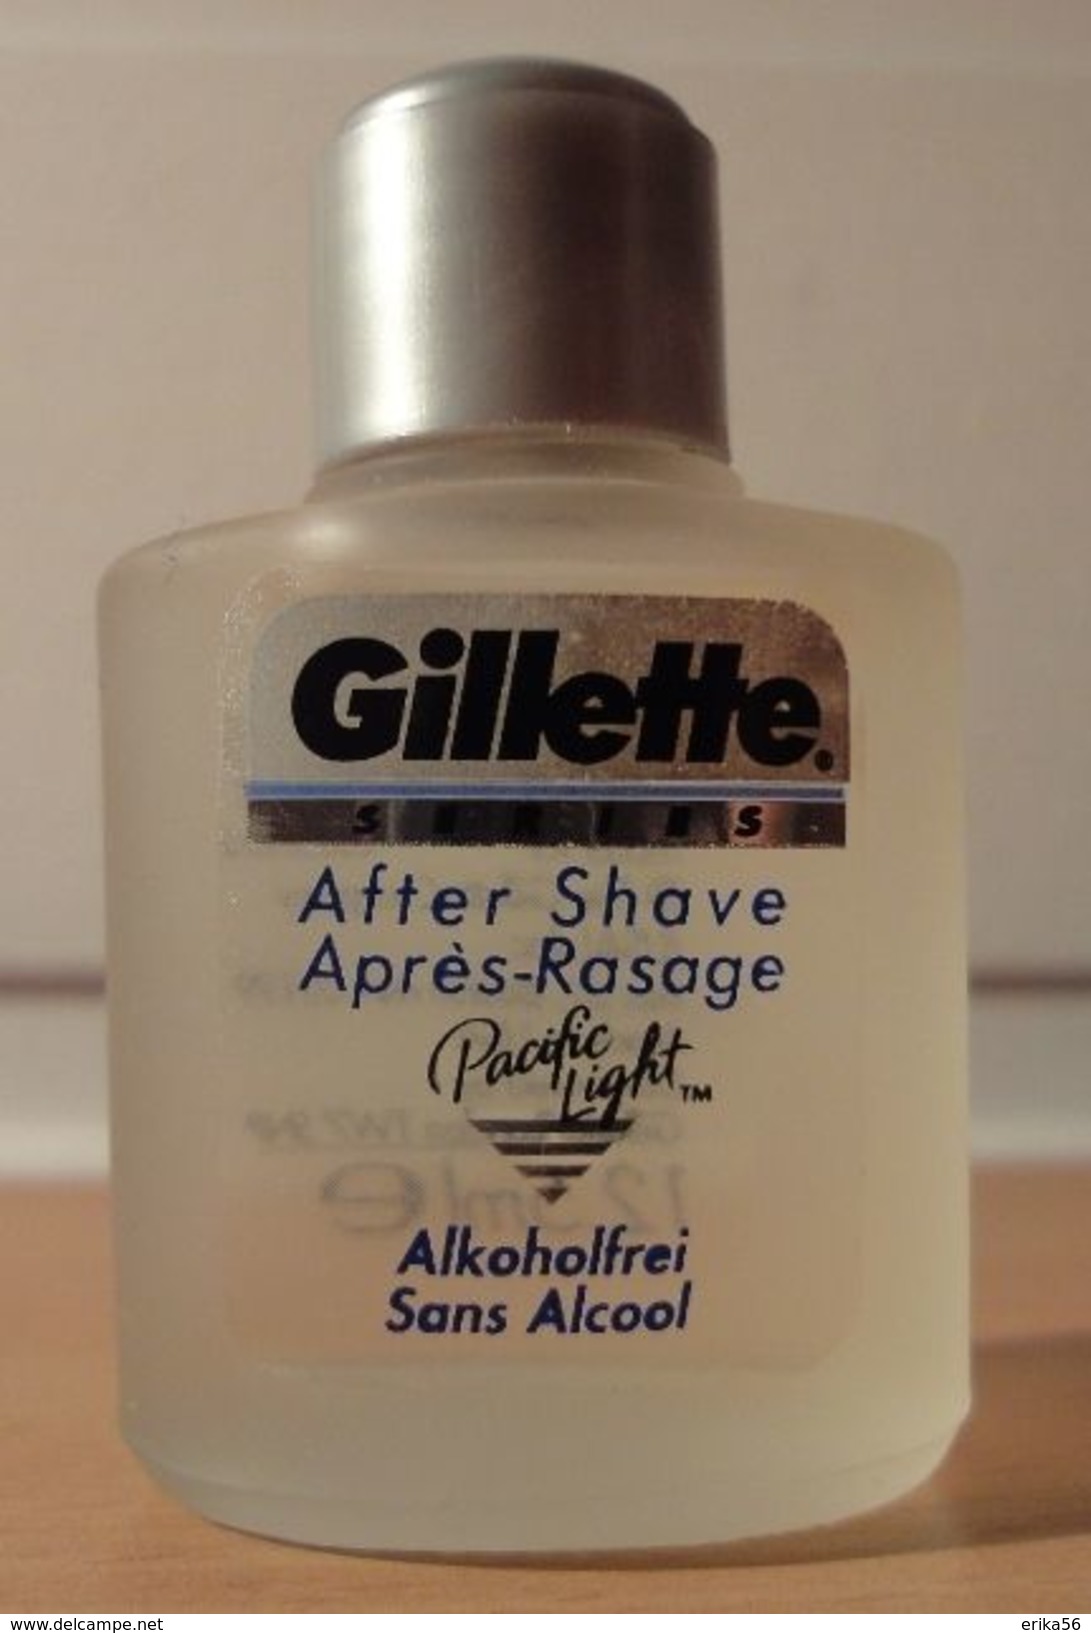 Gillette Series - After Shave PACIFIC LIGHT - Miniaturas Hombre (sin Caja)